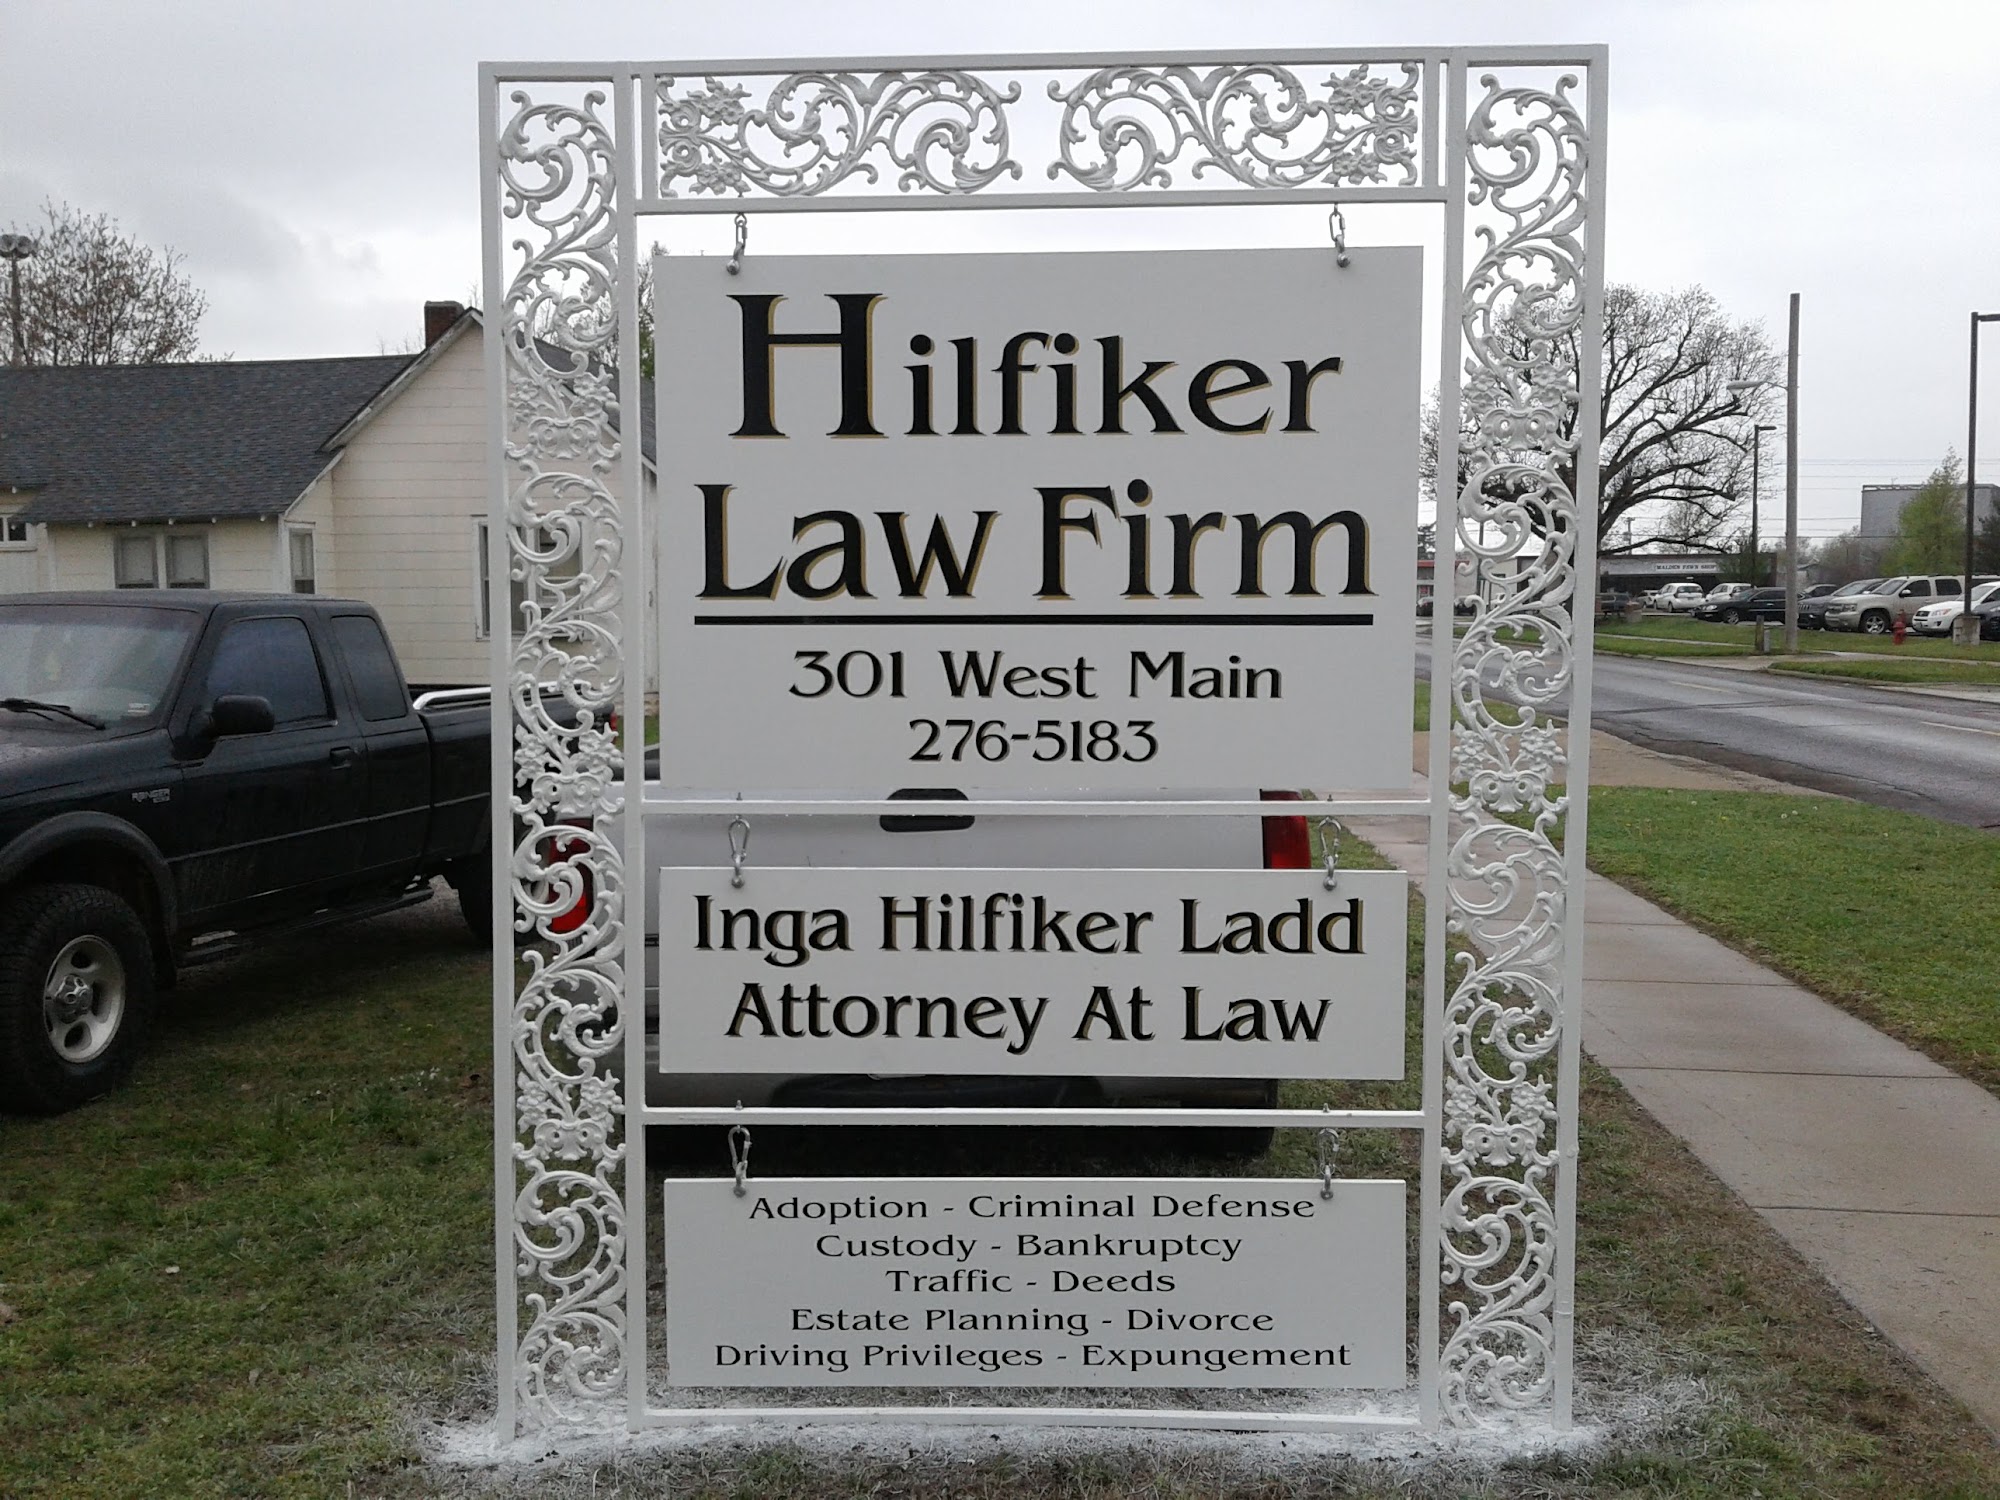 Hilfiker Law Firm 301 W Main St, Malden Missouri 63863